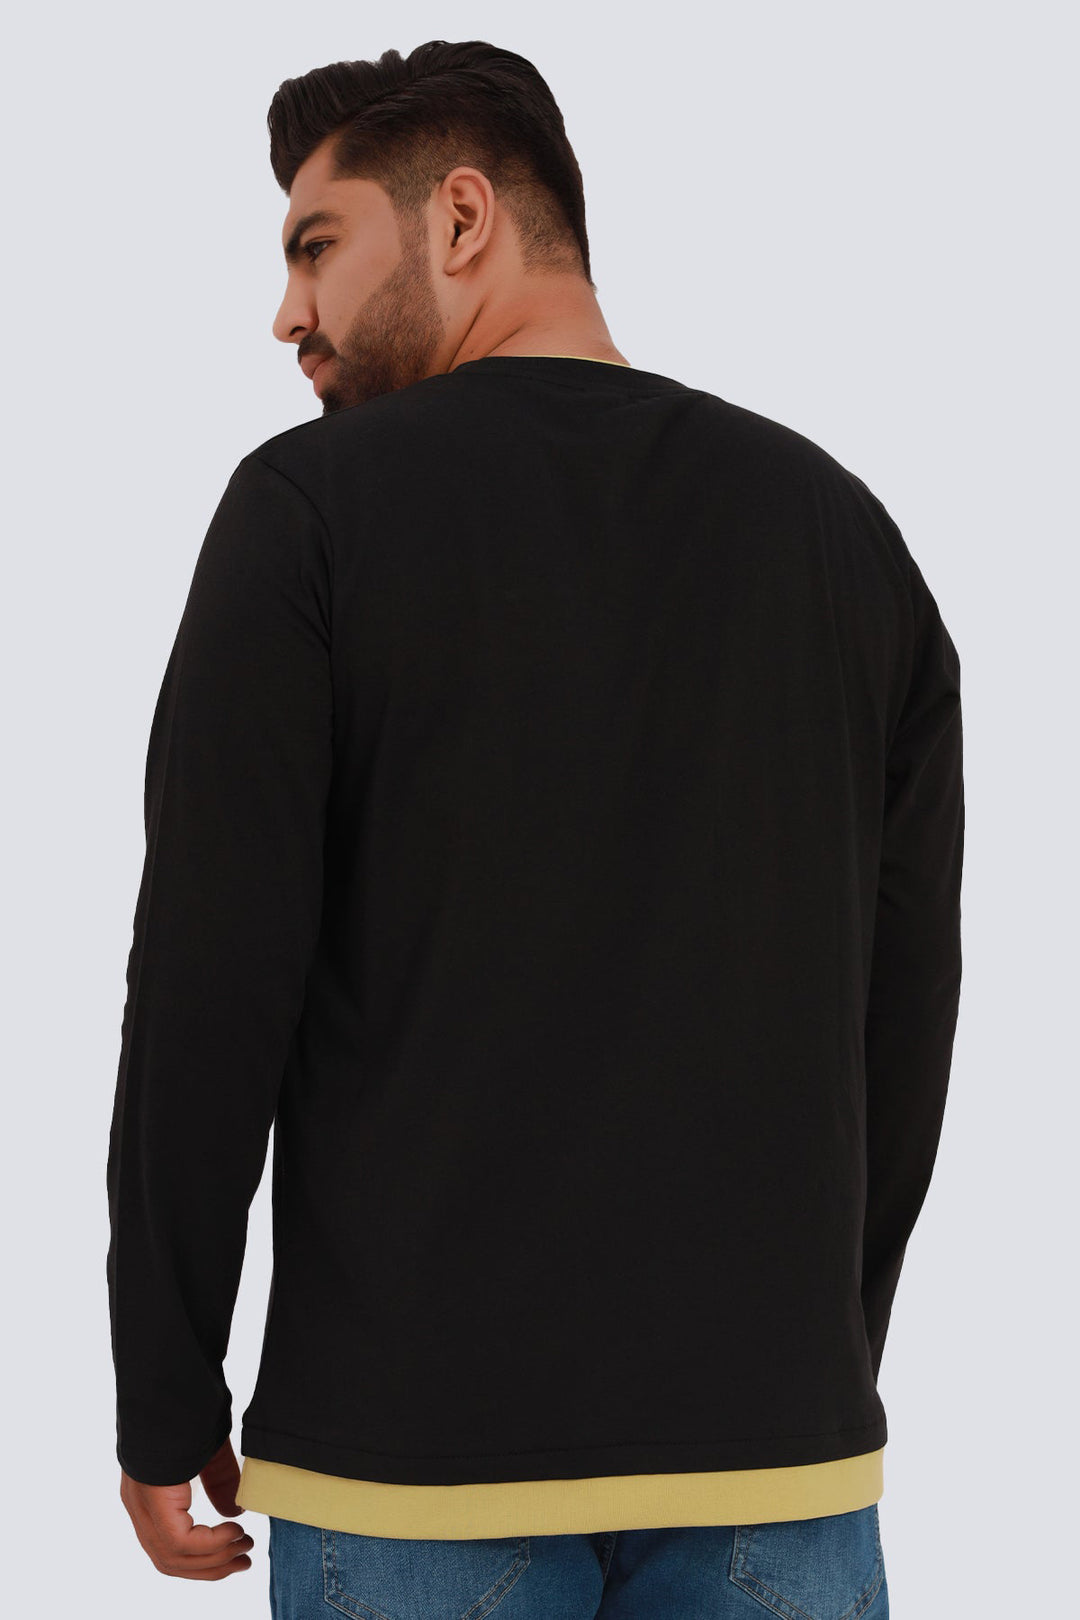 Significant Black & Olive T-Shirt Plus Size